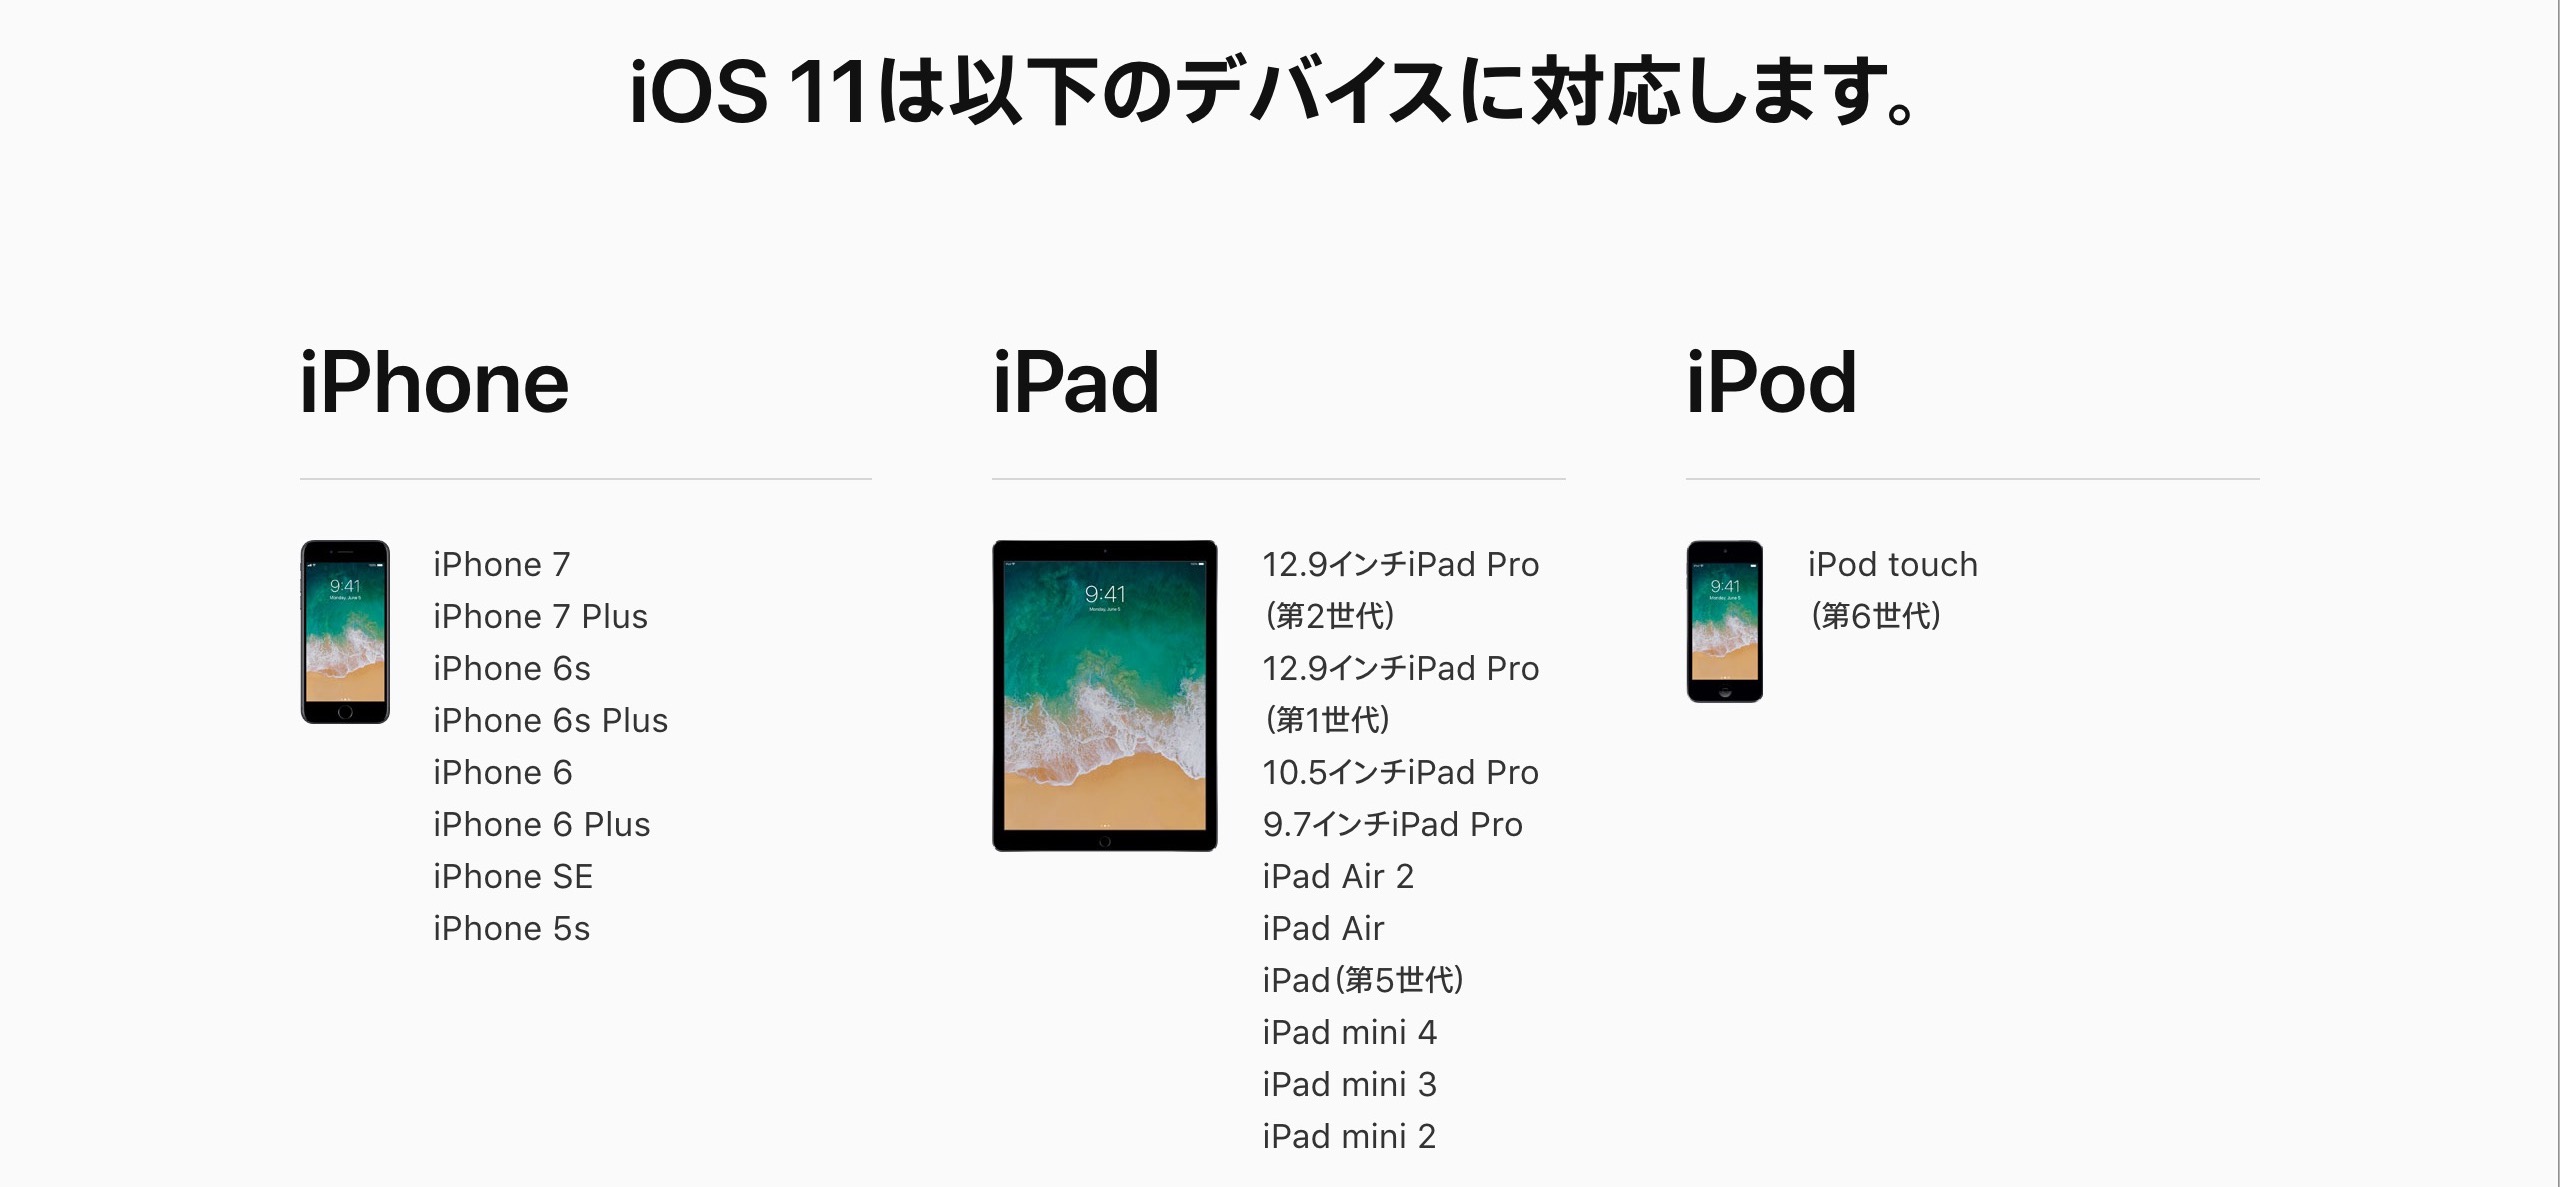 iOS 11、iPhone 5 / 5cなど32bitデバイスがアップデート対象外に。